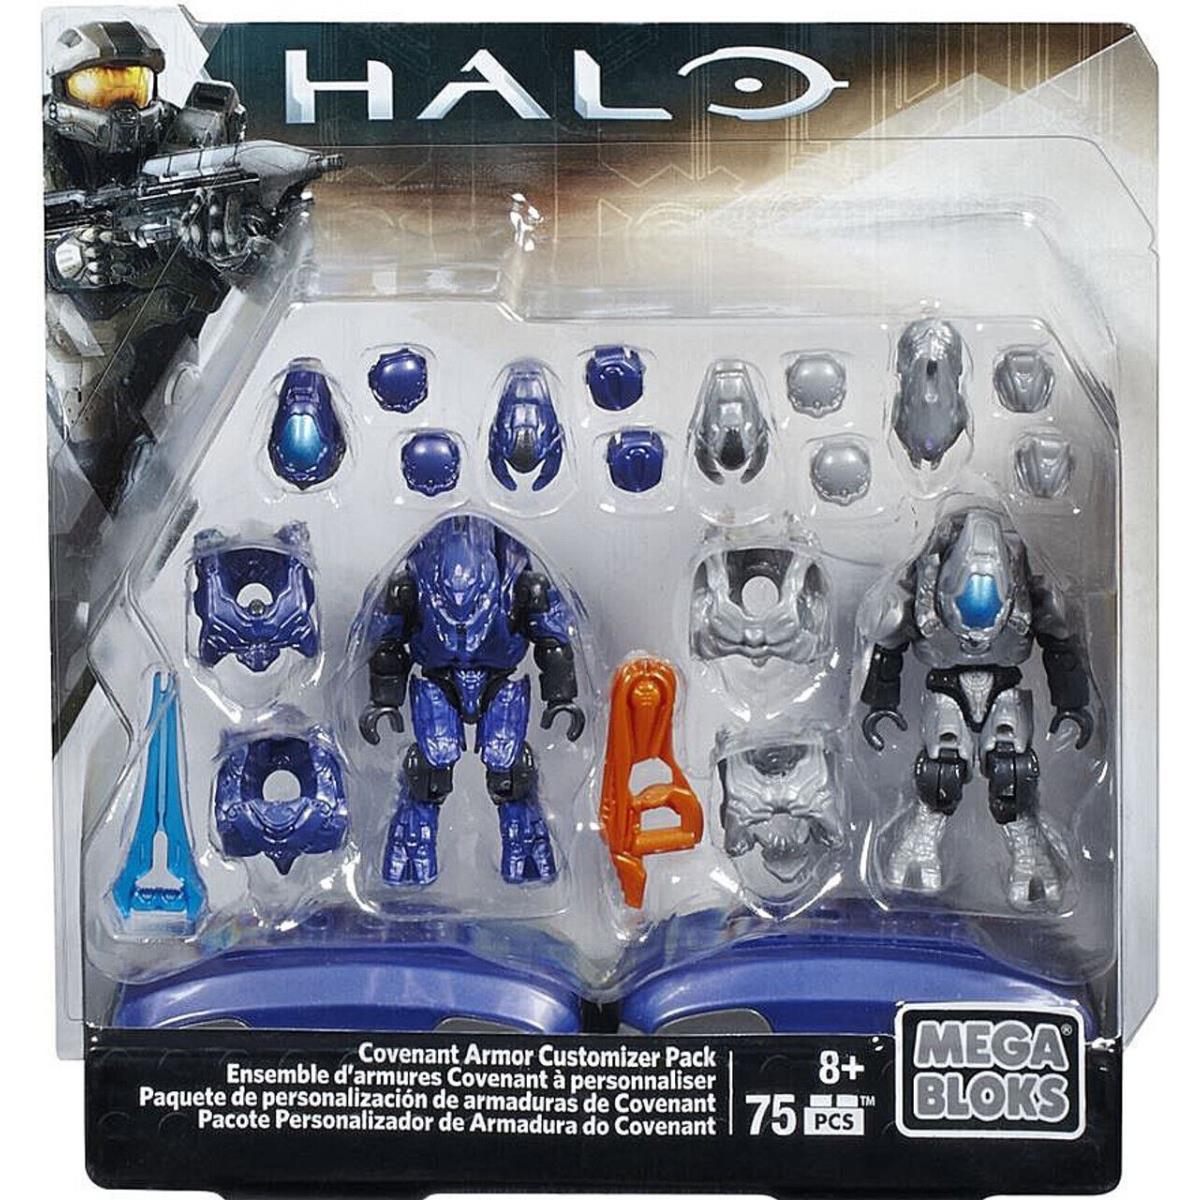 Halo Mega Bloks Covenant Armor Customizer Pack CNH21 Elite Zealot Ranger Minor